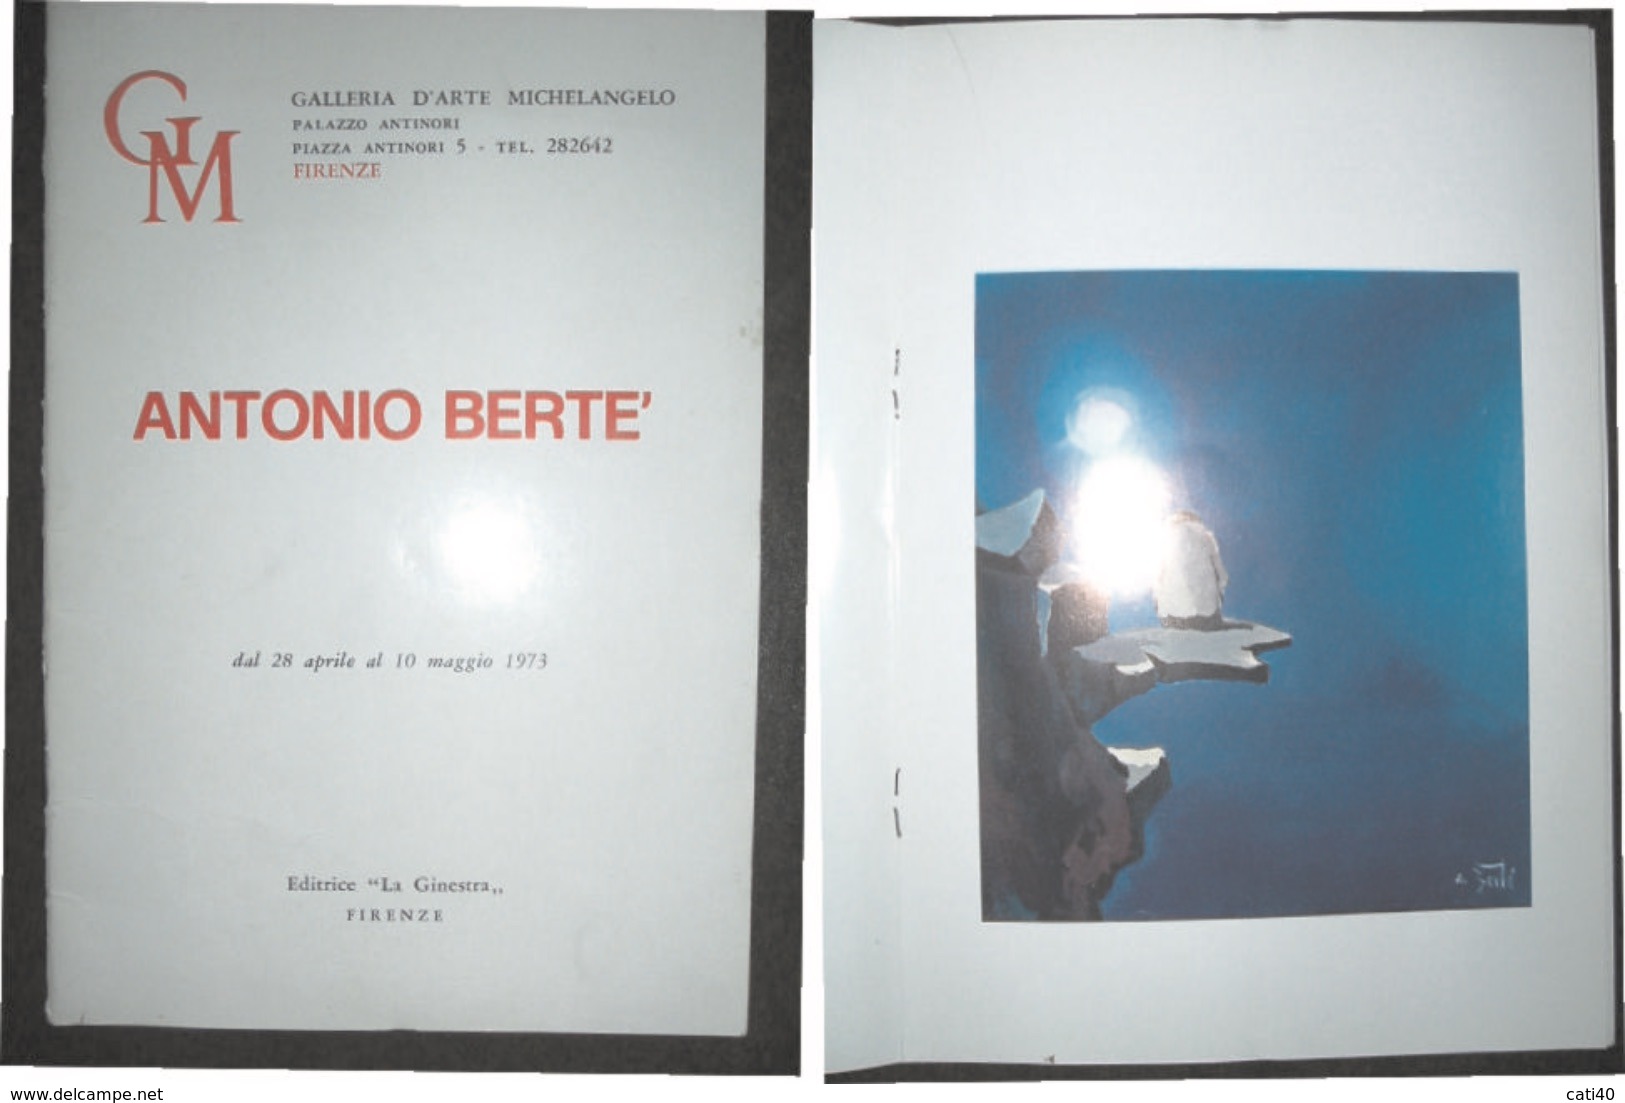 ANTONIO BERTE' CATALOGO DELLA MOSTRA PERSONALE ALLA GALLERIA D'ARTE MICHELANGELO FIRENZE DAL 28 APRILE AL 10 MAGGIO 1973 - Textos Científicos